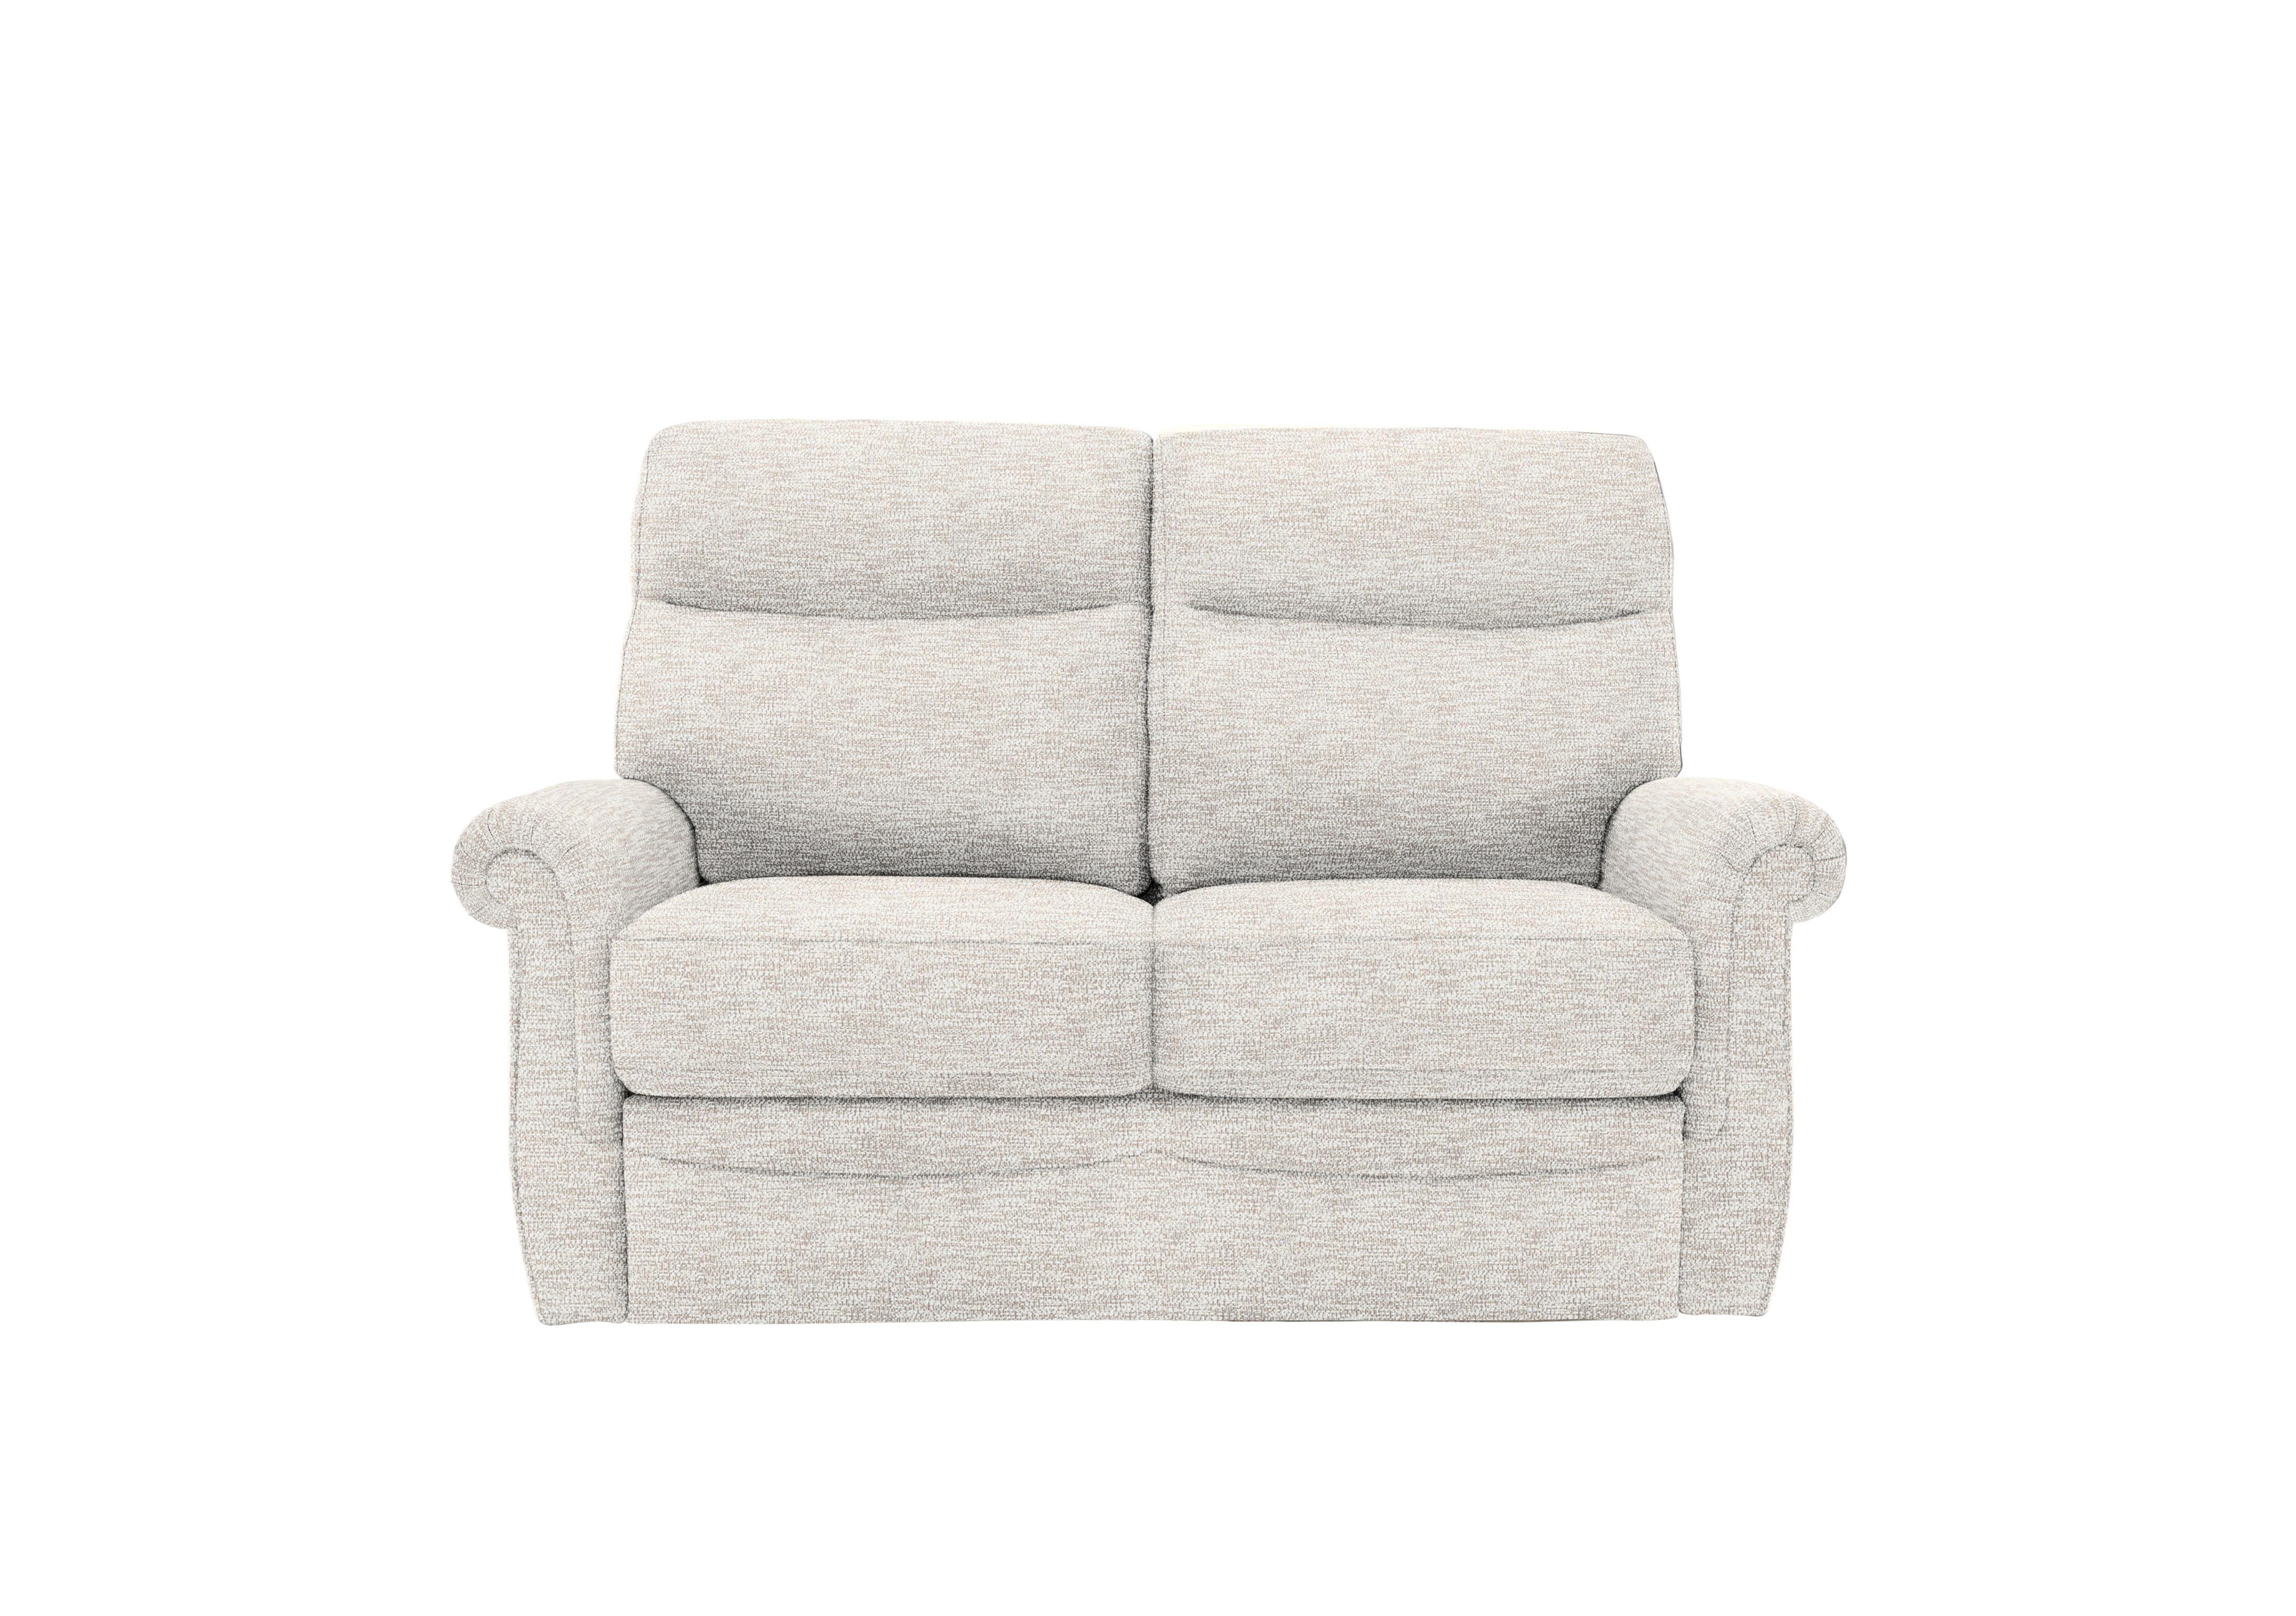 Avon Small 2 Seater Fabric Sofa in C931 Rush Cream on Furniture Village